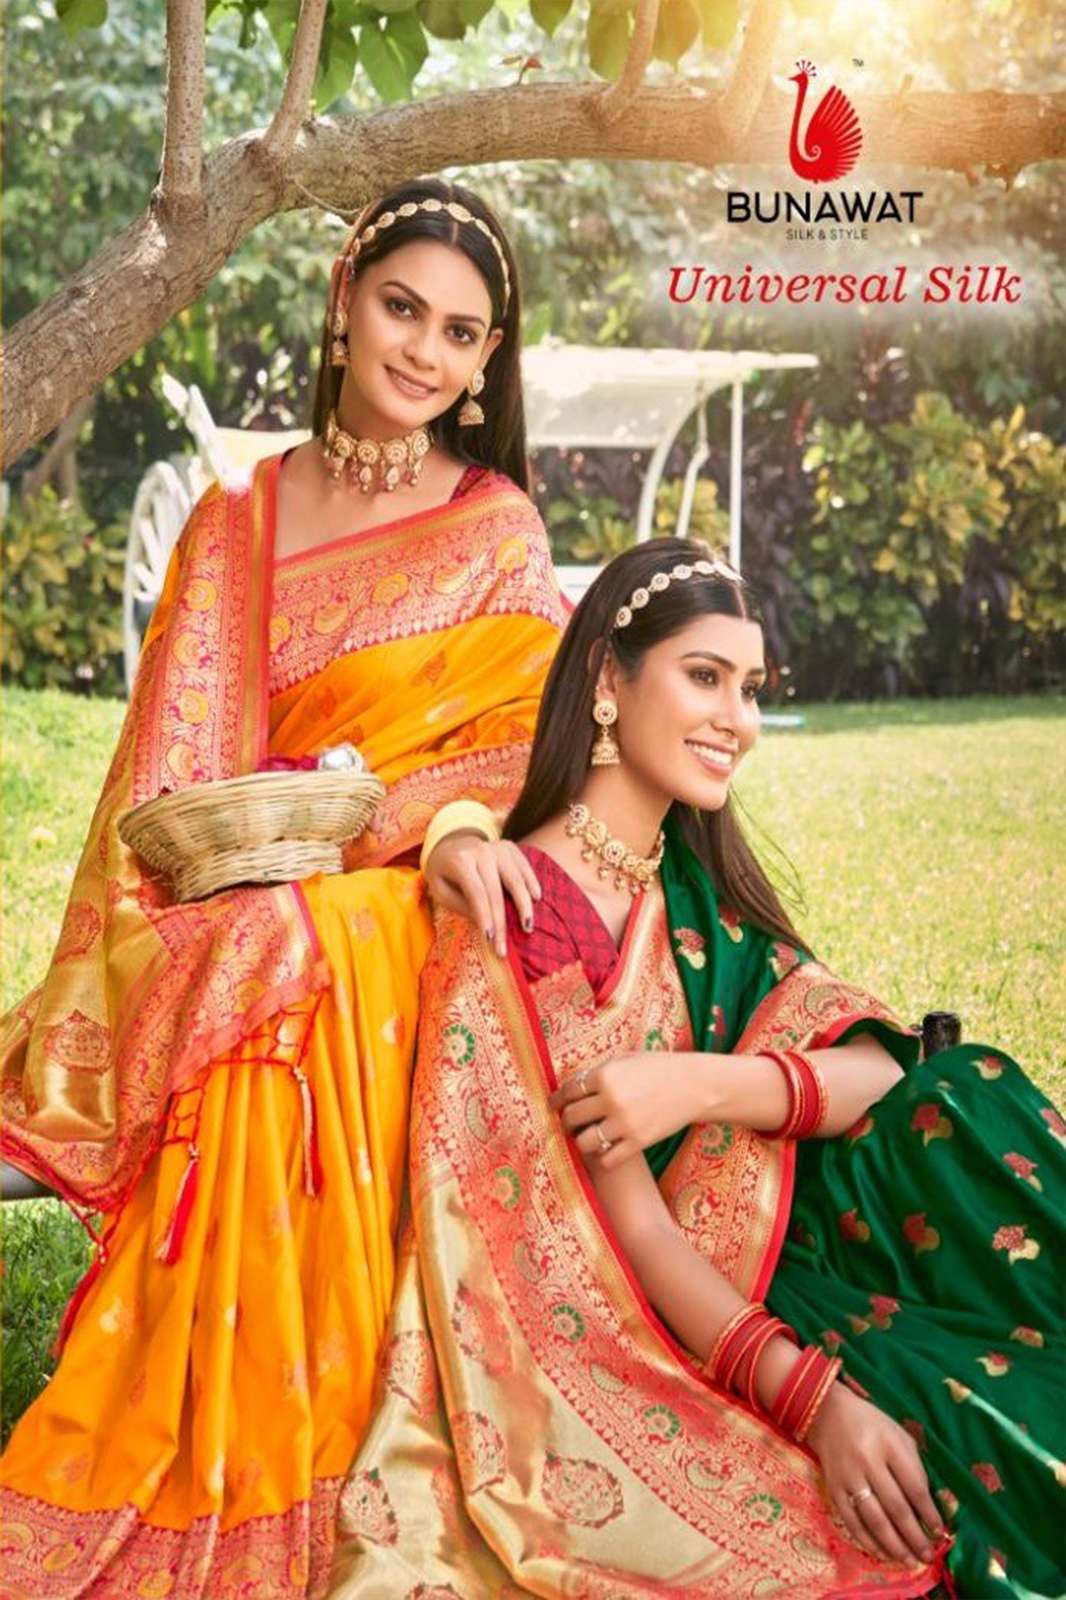 BUNAWAT 5365 UNIVERSAL SILK Silk Saree With Beautiful Print in Multicolors